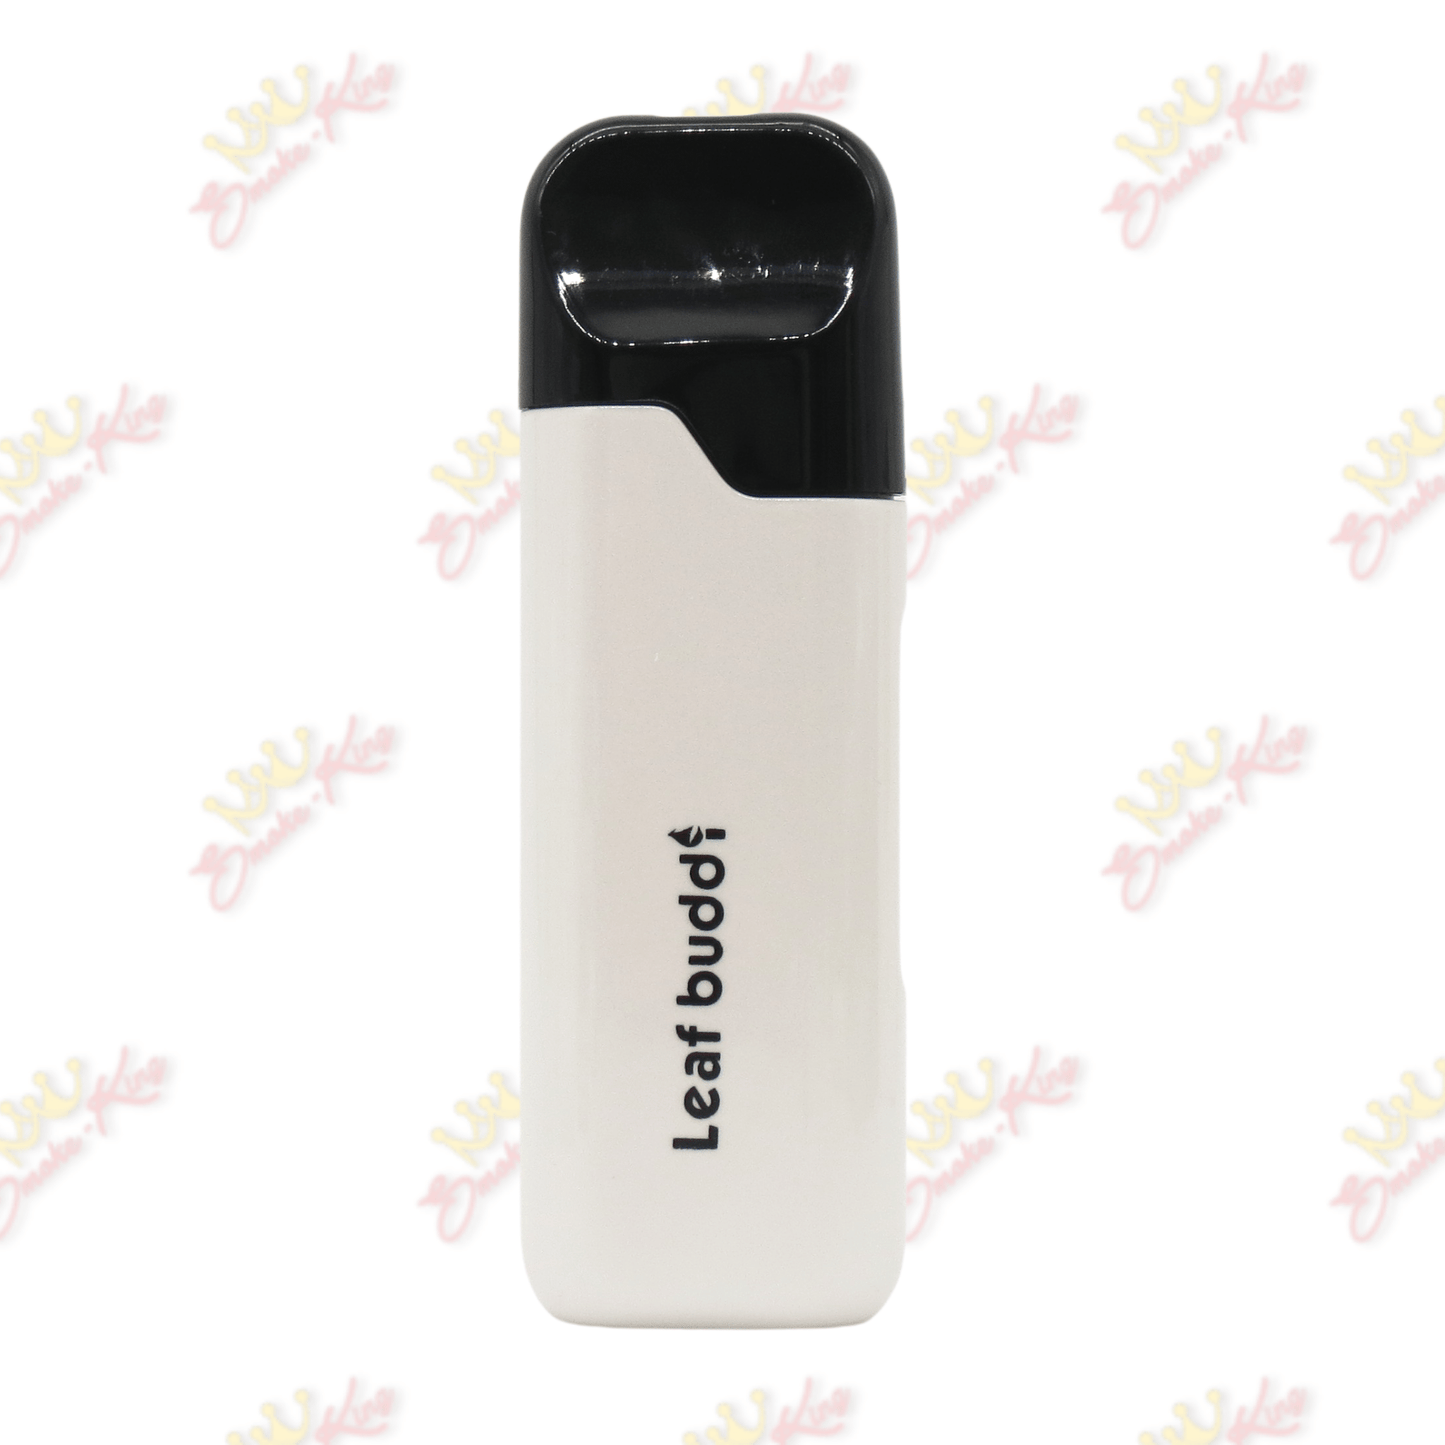 Leafbuddi Leaf Buddi Aura - Discreet Battery Leaf Buddi Aura | Cartridge Battery | Smoke-King